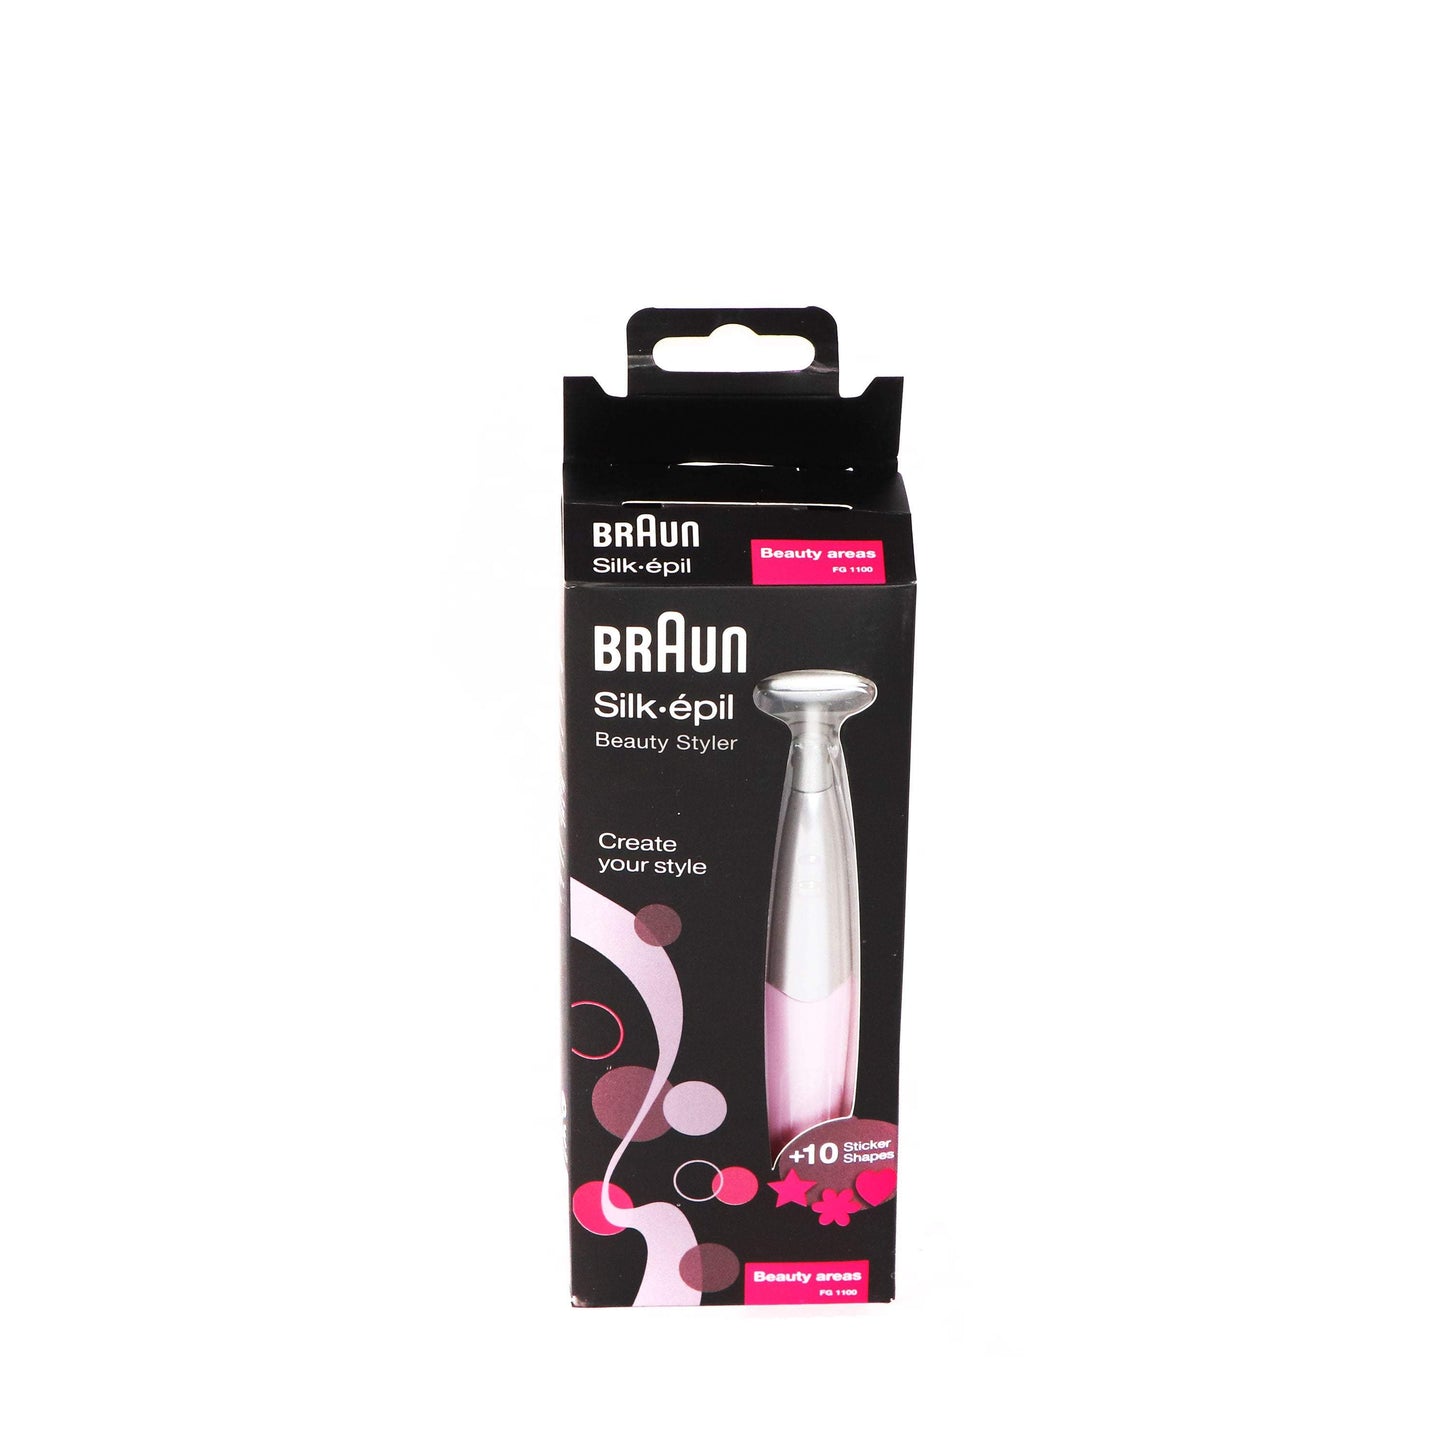 Braun Electric Hair Remover Braun 222640 900W White Violet-Royal Brands Co-